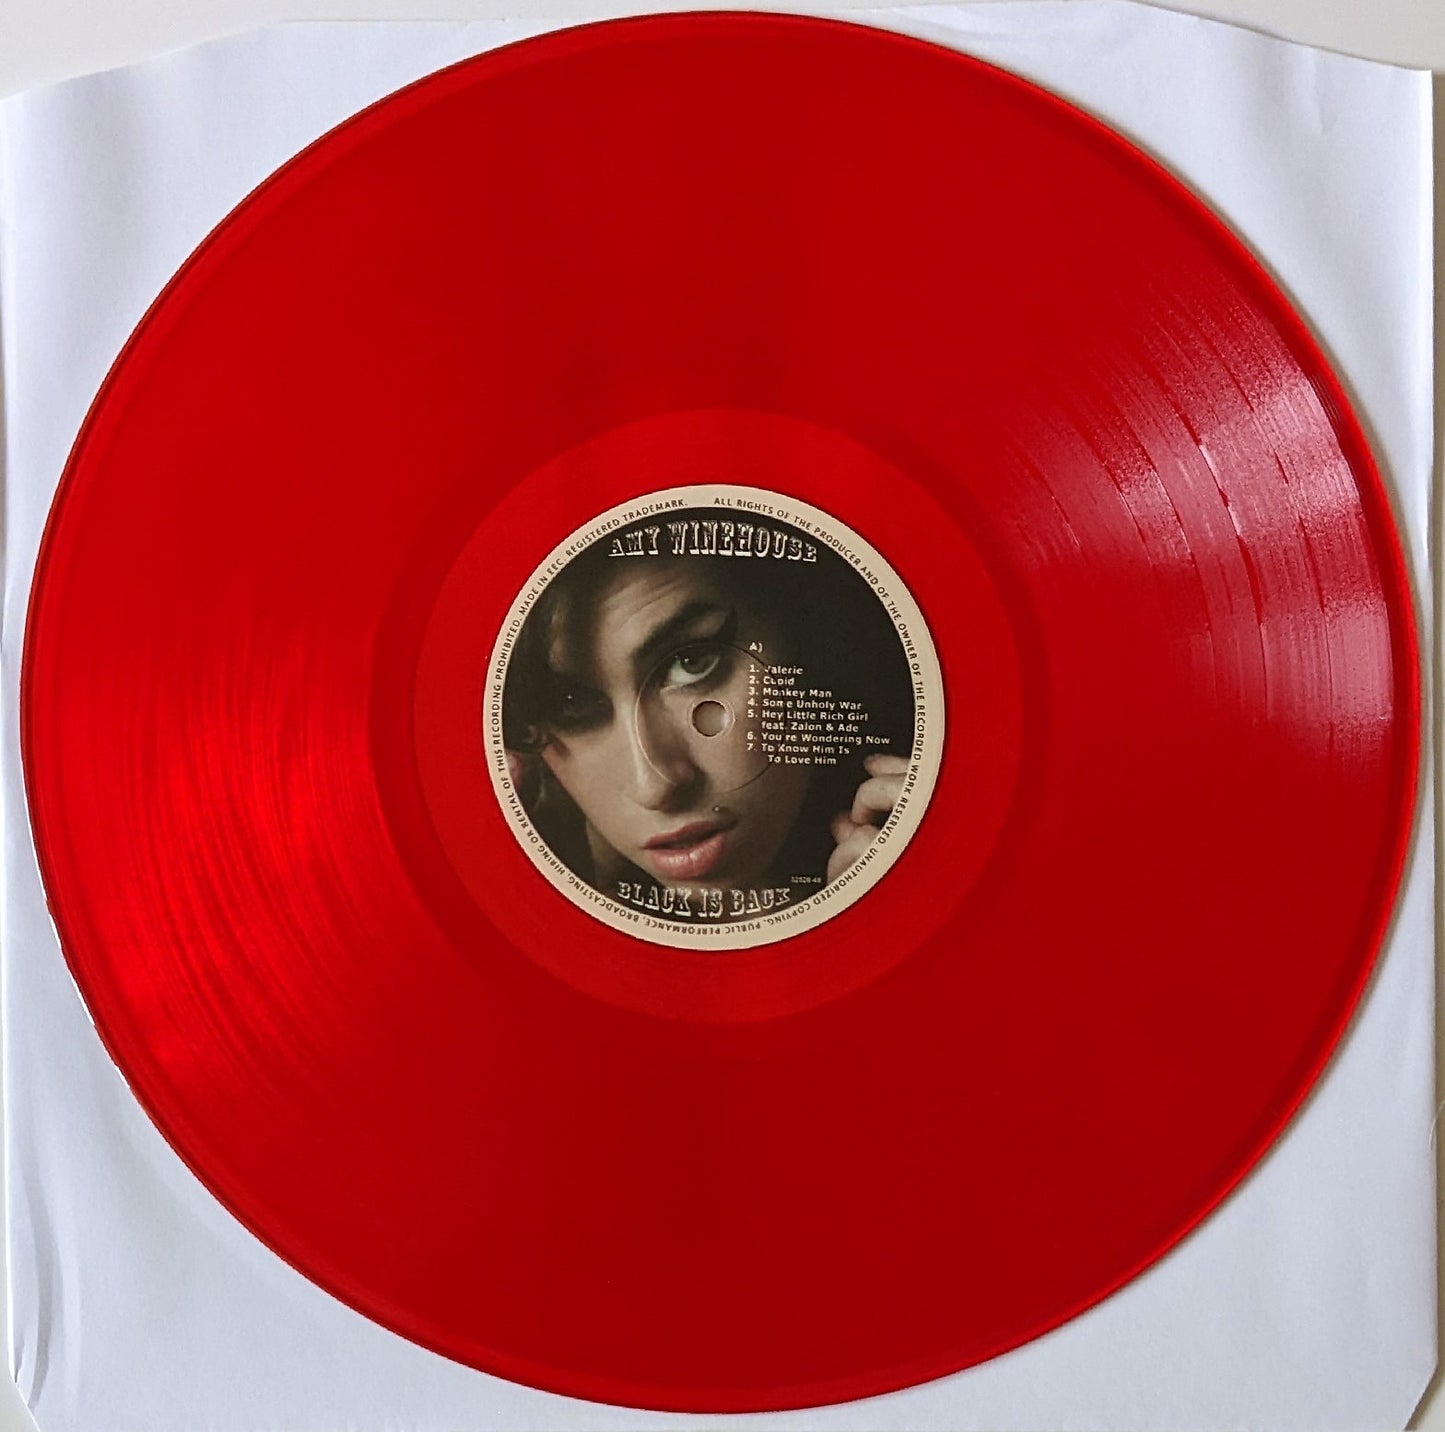 Amy Winehouse – Black Is Back - red vinyl